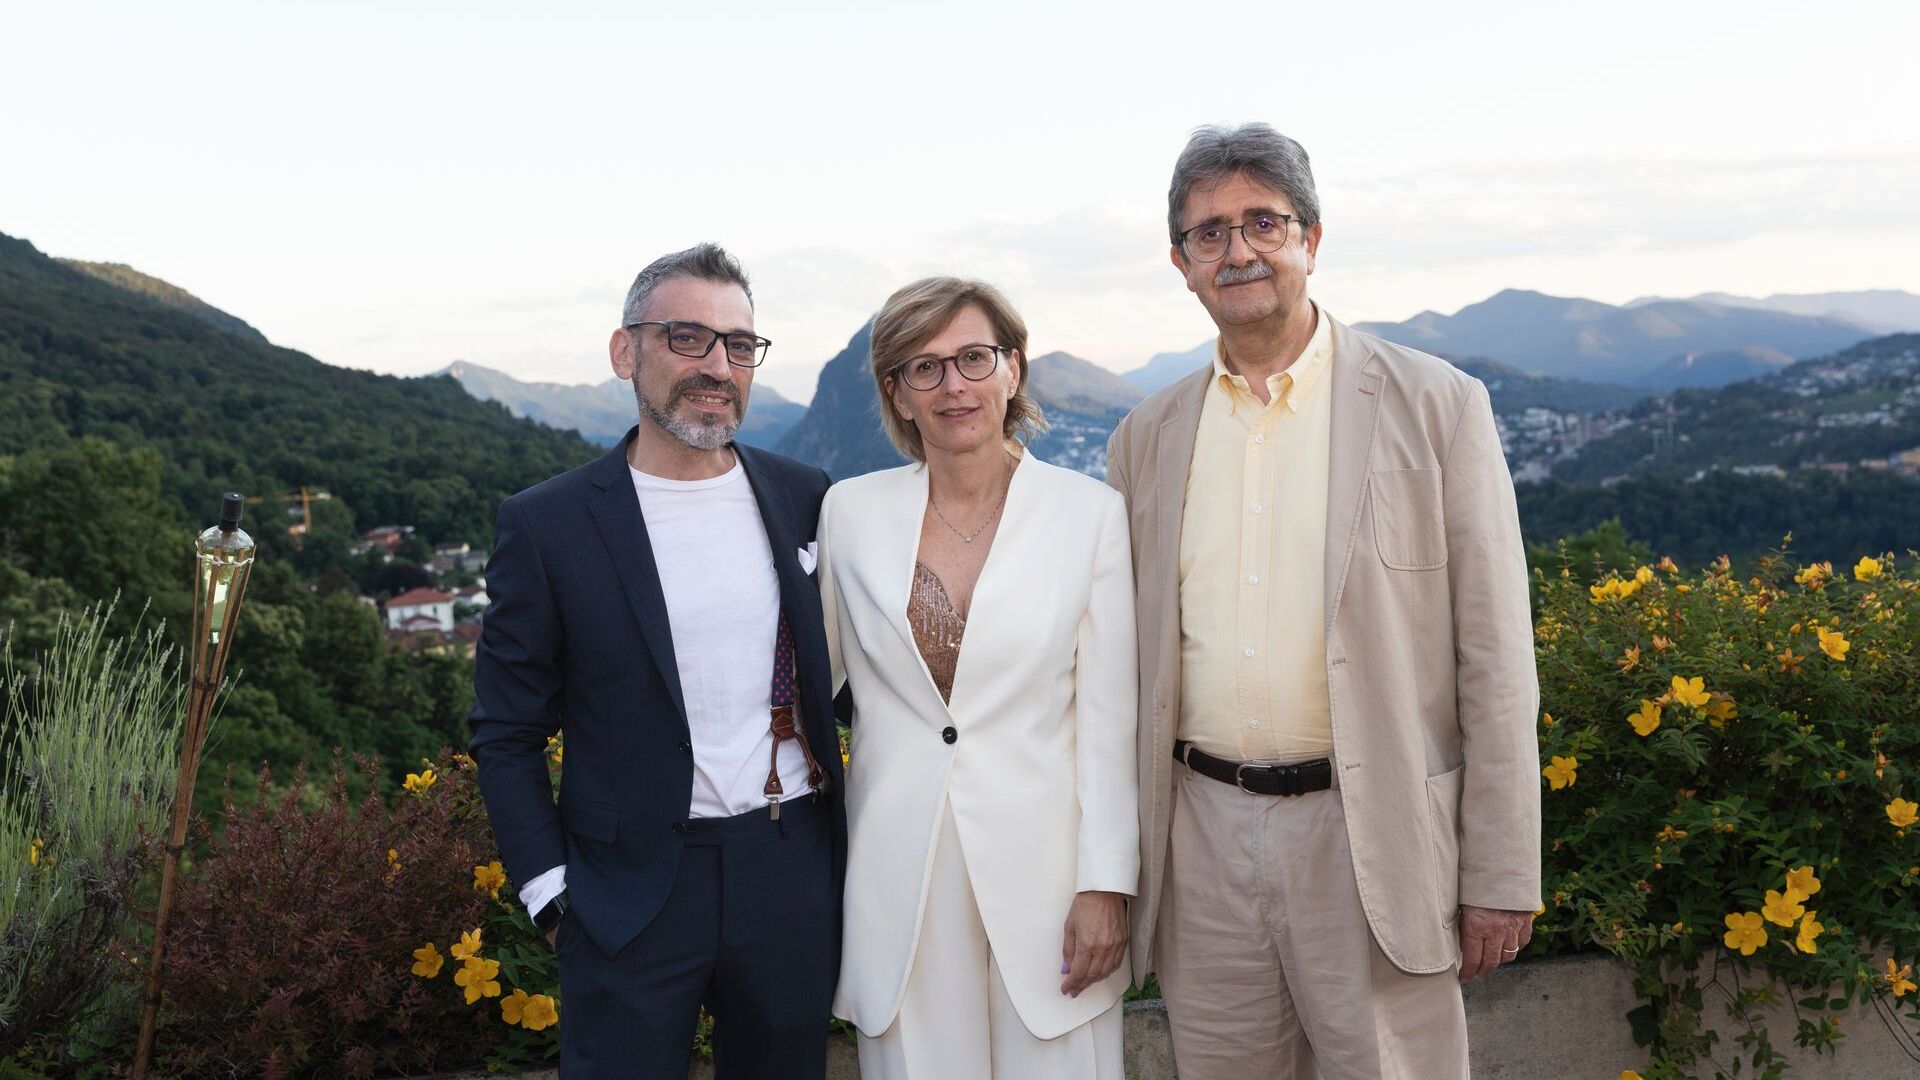 Luca Mauriello en Cristina Giotto, respectievelijk Vice President en President van ated-ICT Ticino, met partner Silvano Marioni